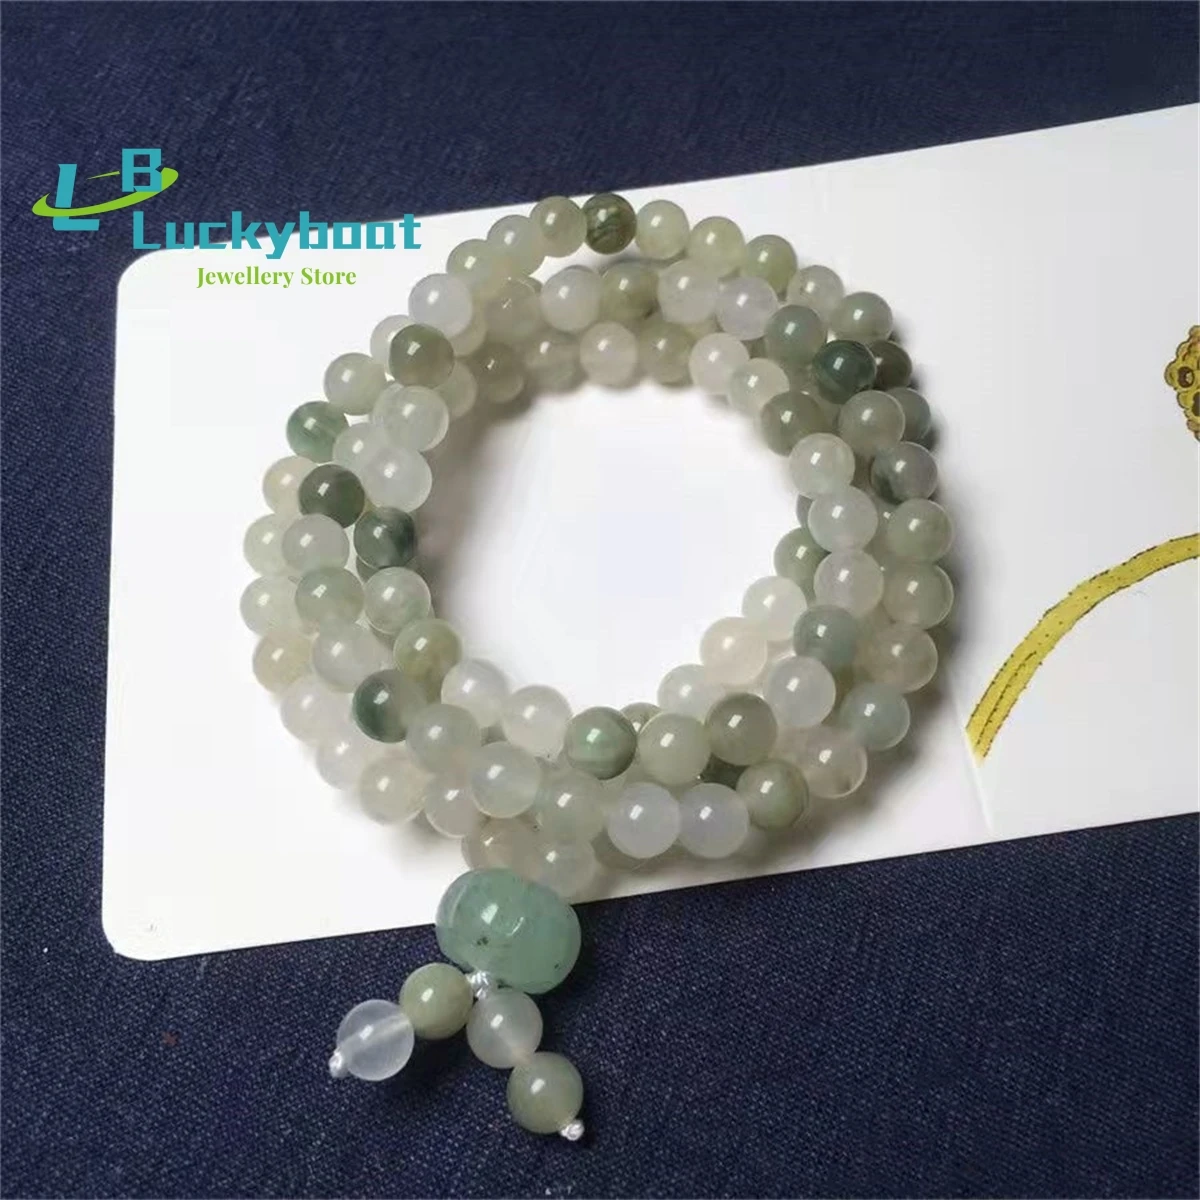 

Xinjiang Jinsi Jade Tianshan Jade Stone Bracelet Women's Floating Flower Jade 108 Fugua Handchain Charm Jewelry Fashion Gift